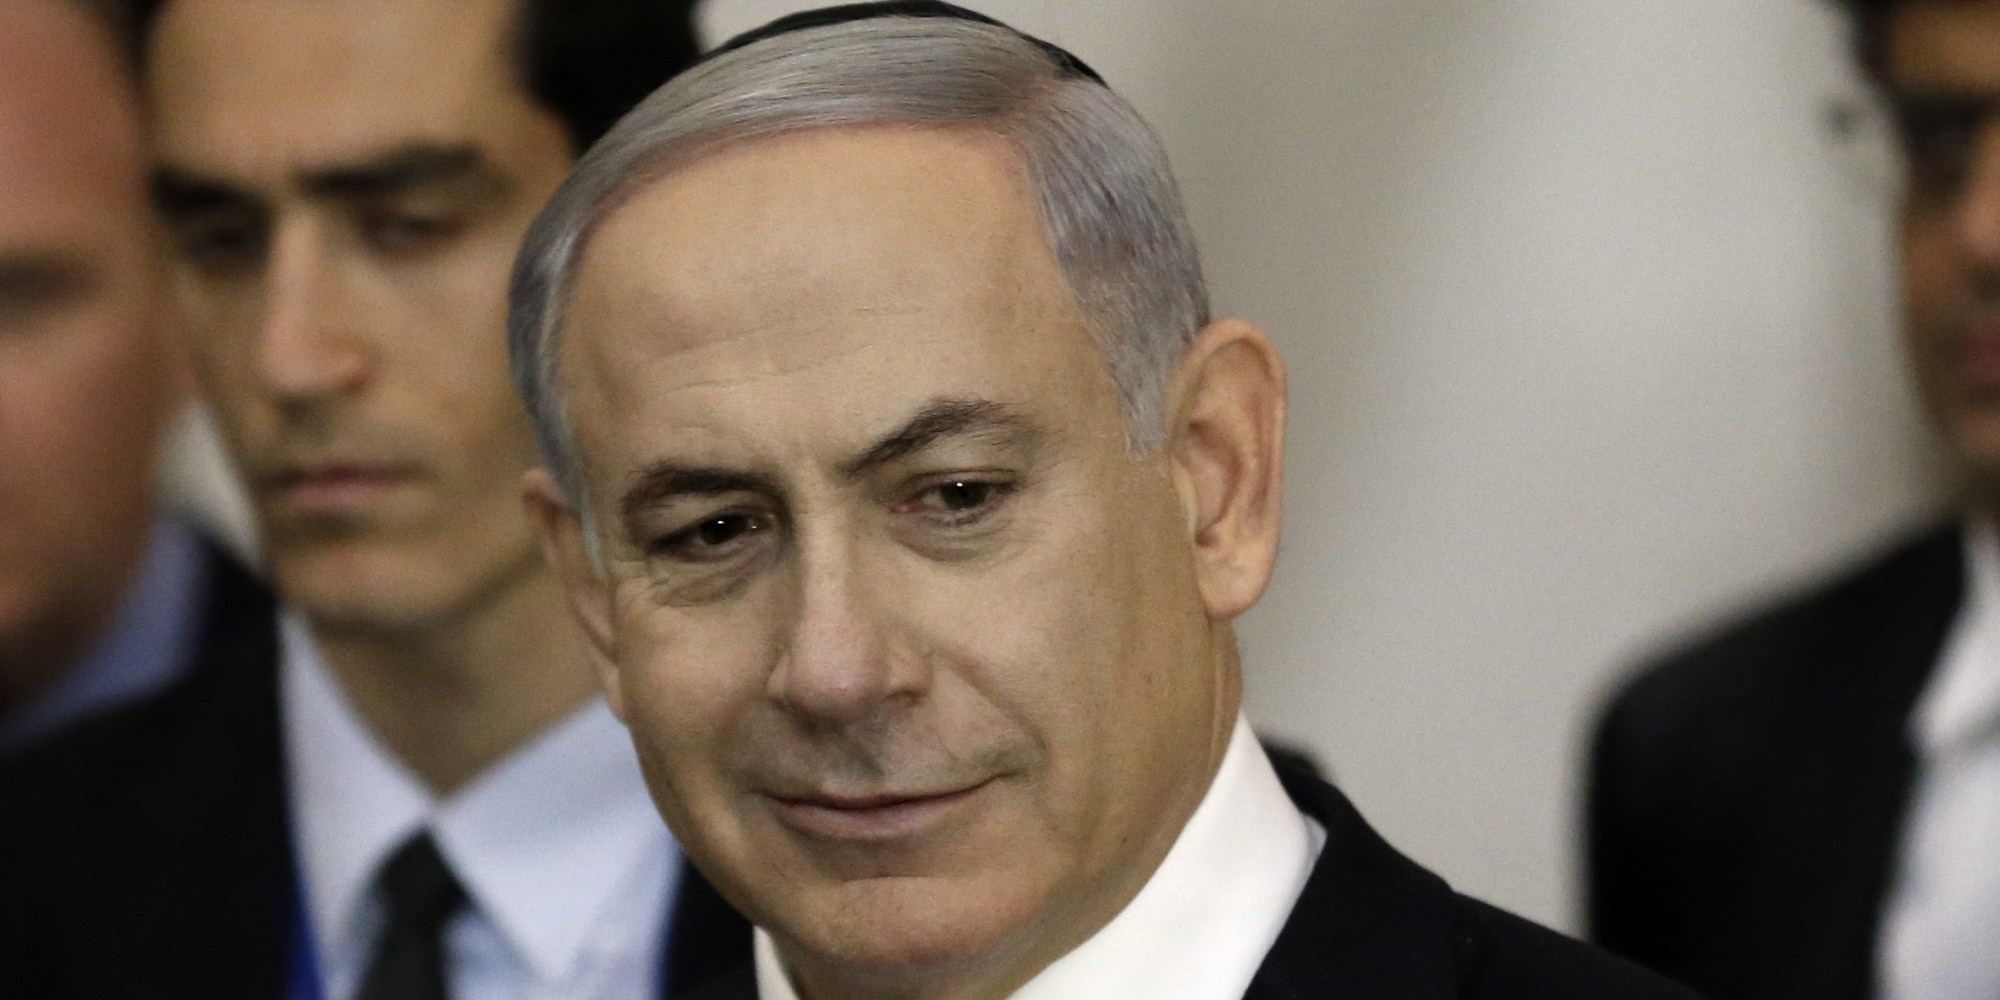 Benjamin Netanyahu Says He Regrets Warning About Israeli Arabs Voting